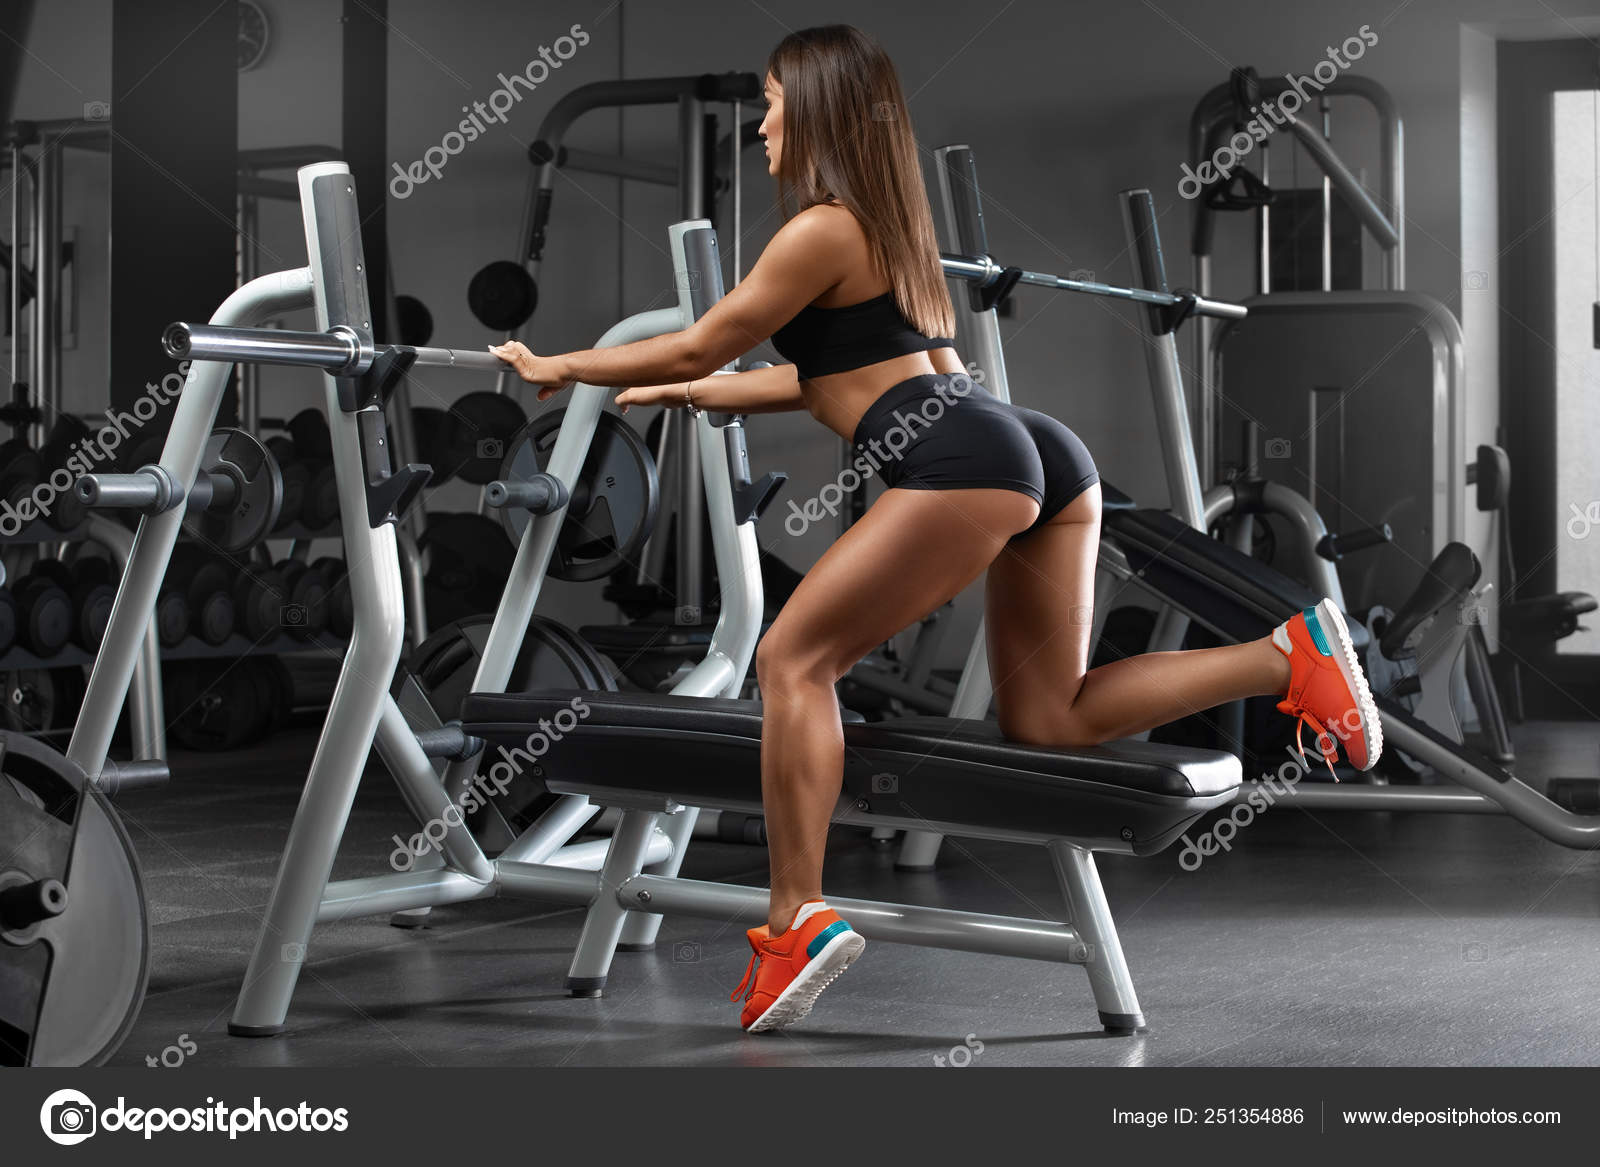 https://st4.depositphotos.com/3383955/25135/i/1600/depositphotos_251354886-stock-photo-sexy-athletic-girl-working-out.jpg